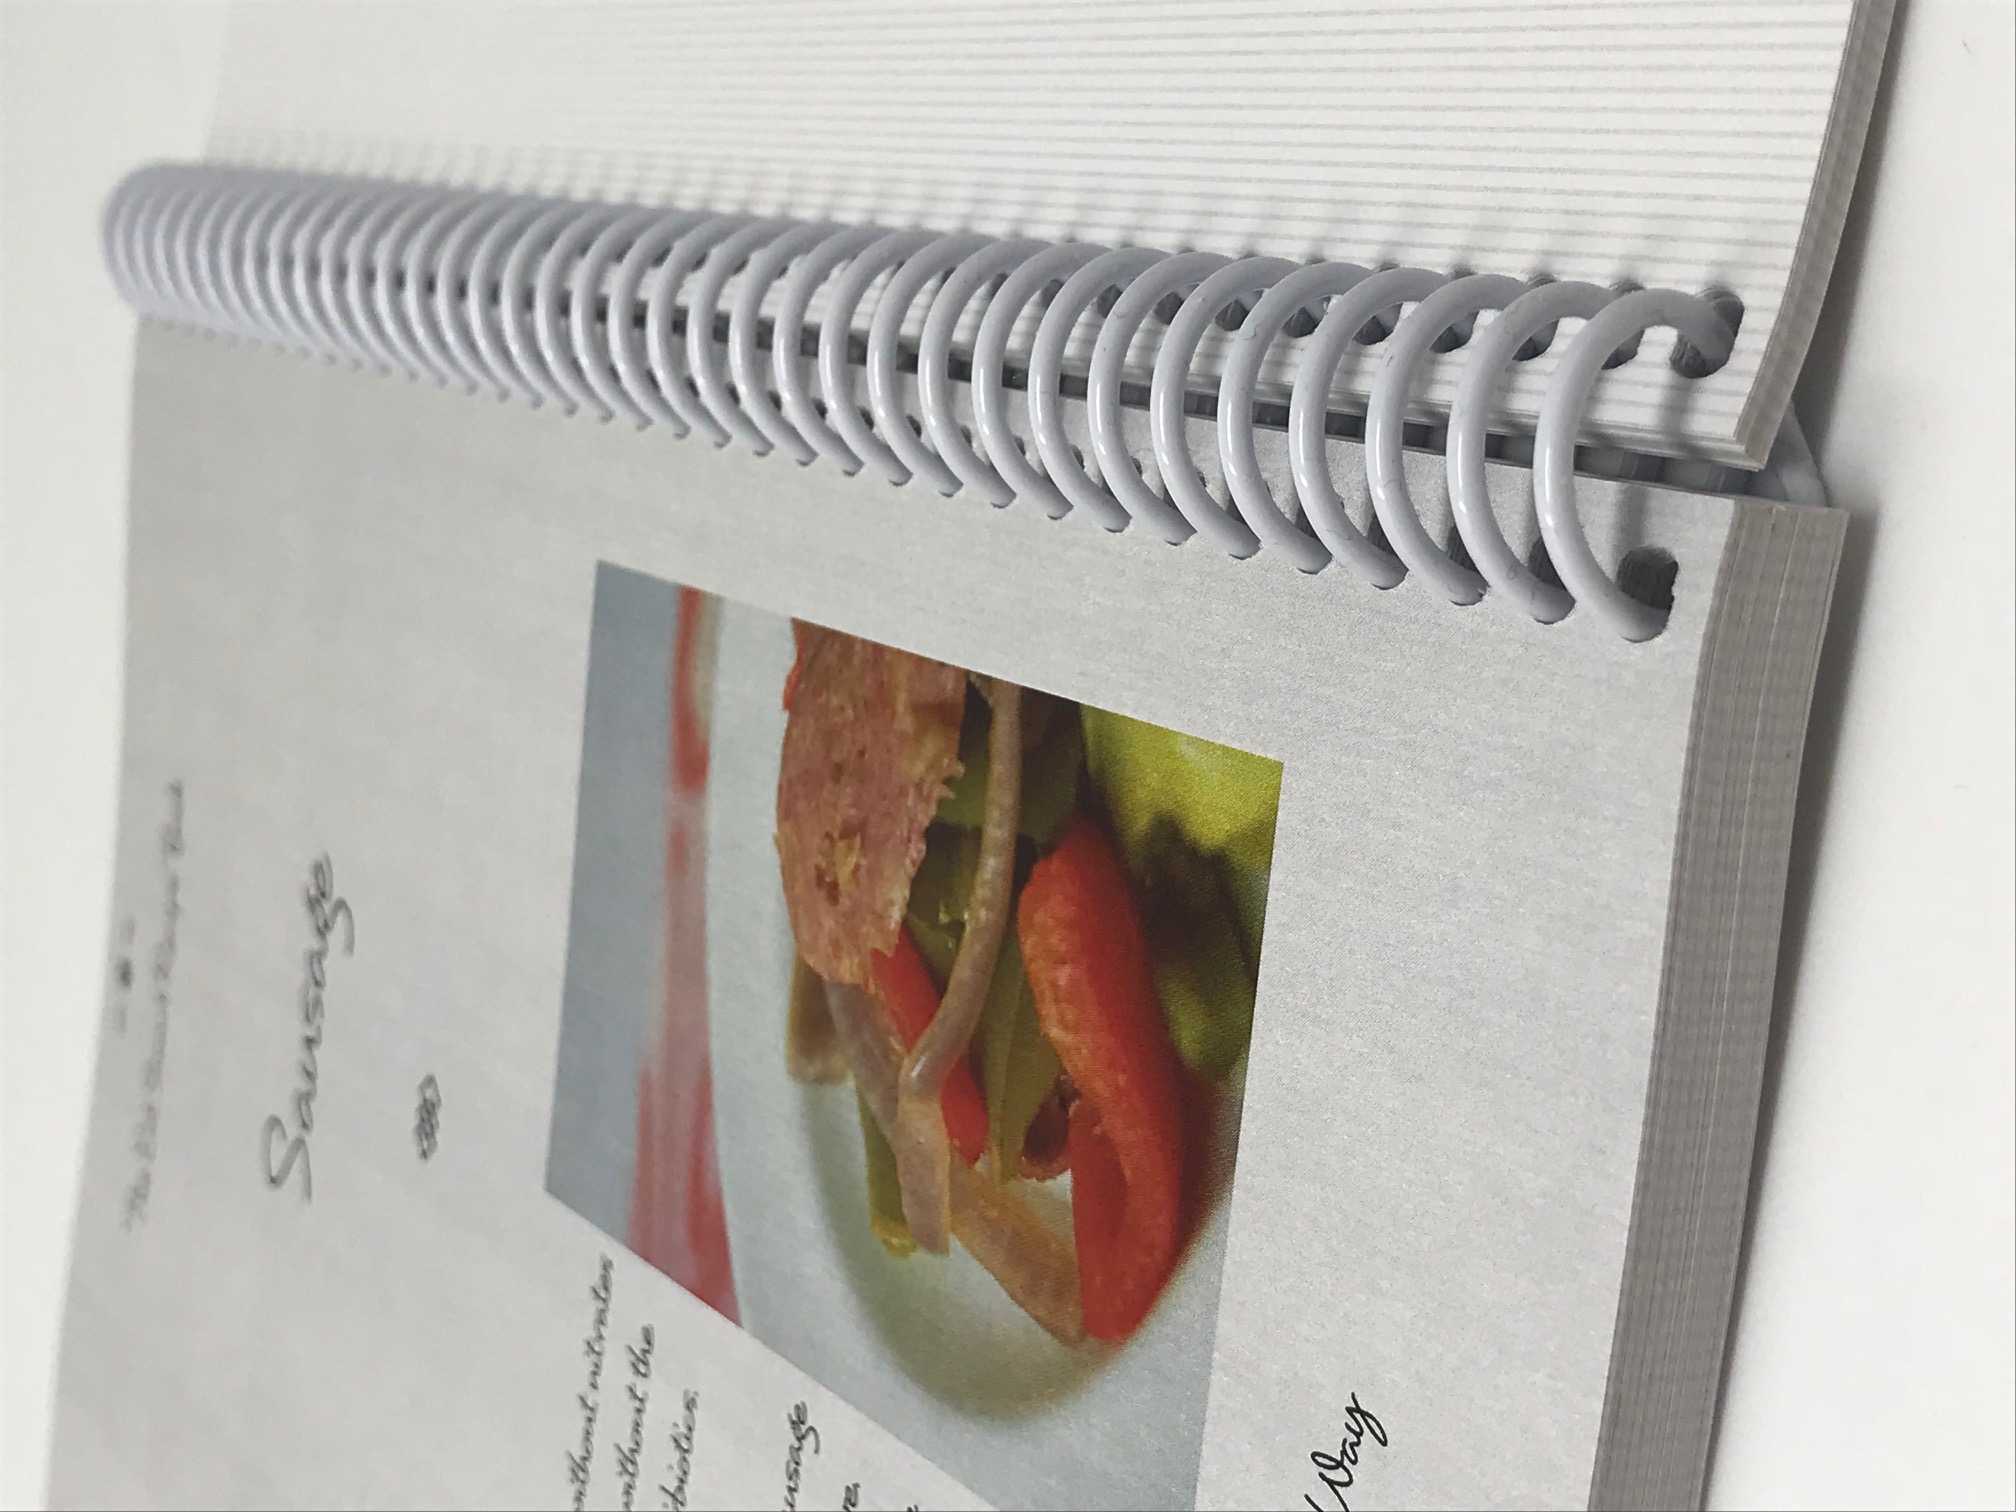 Cookbook with lay-flat binding